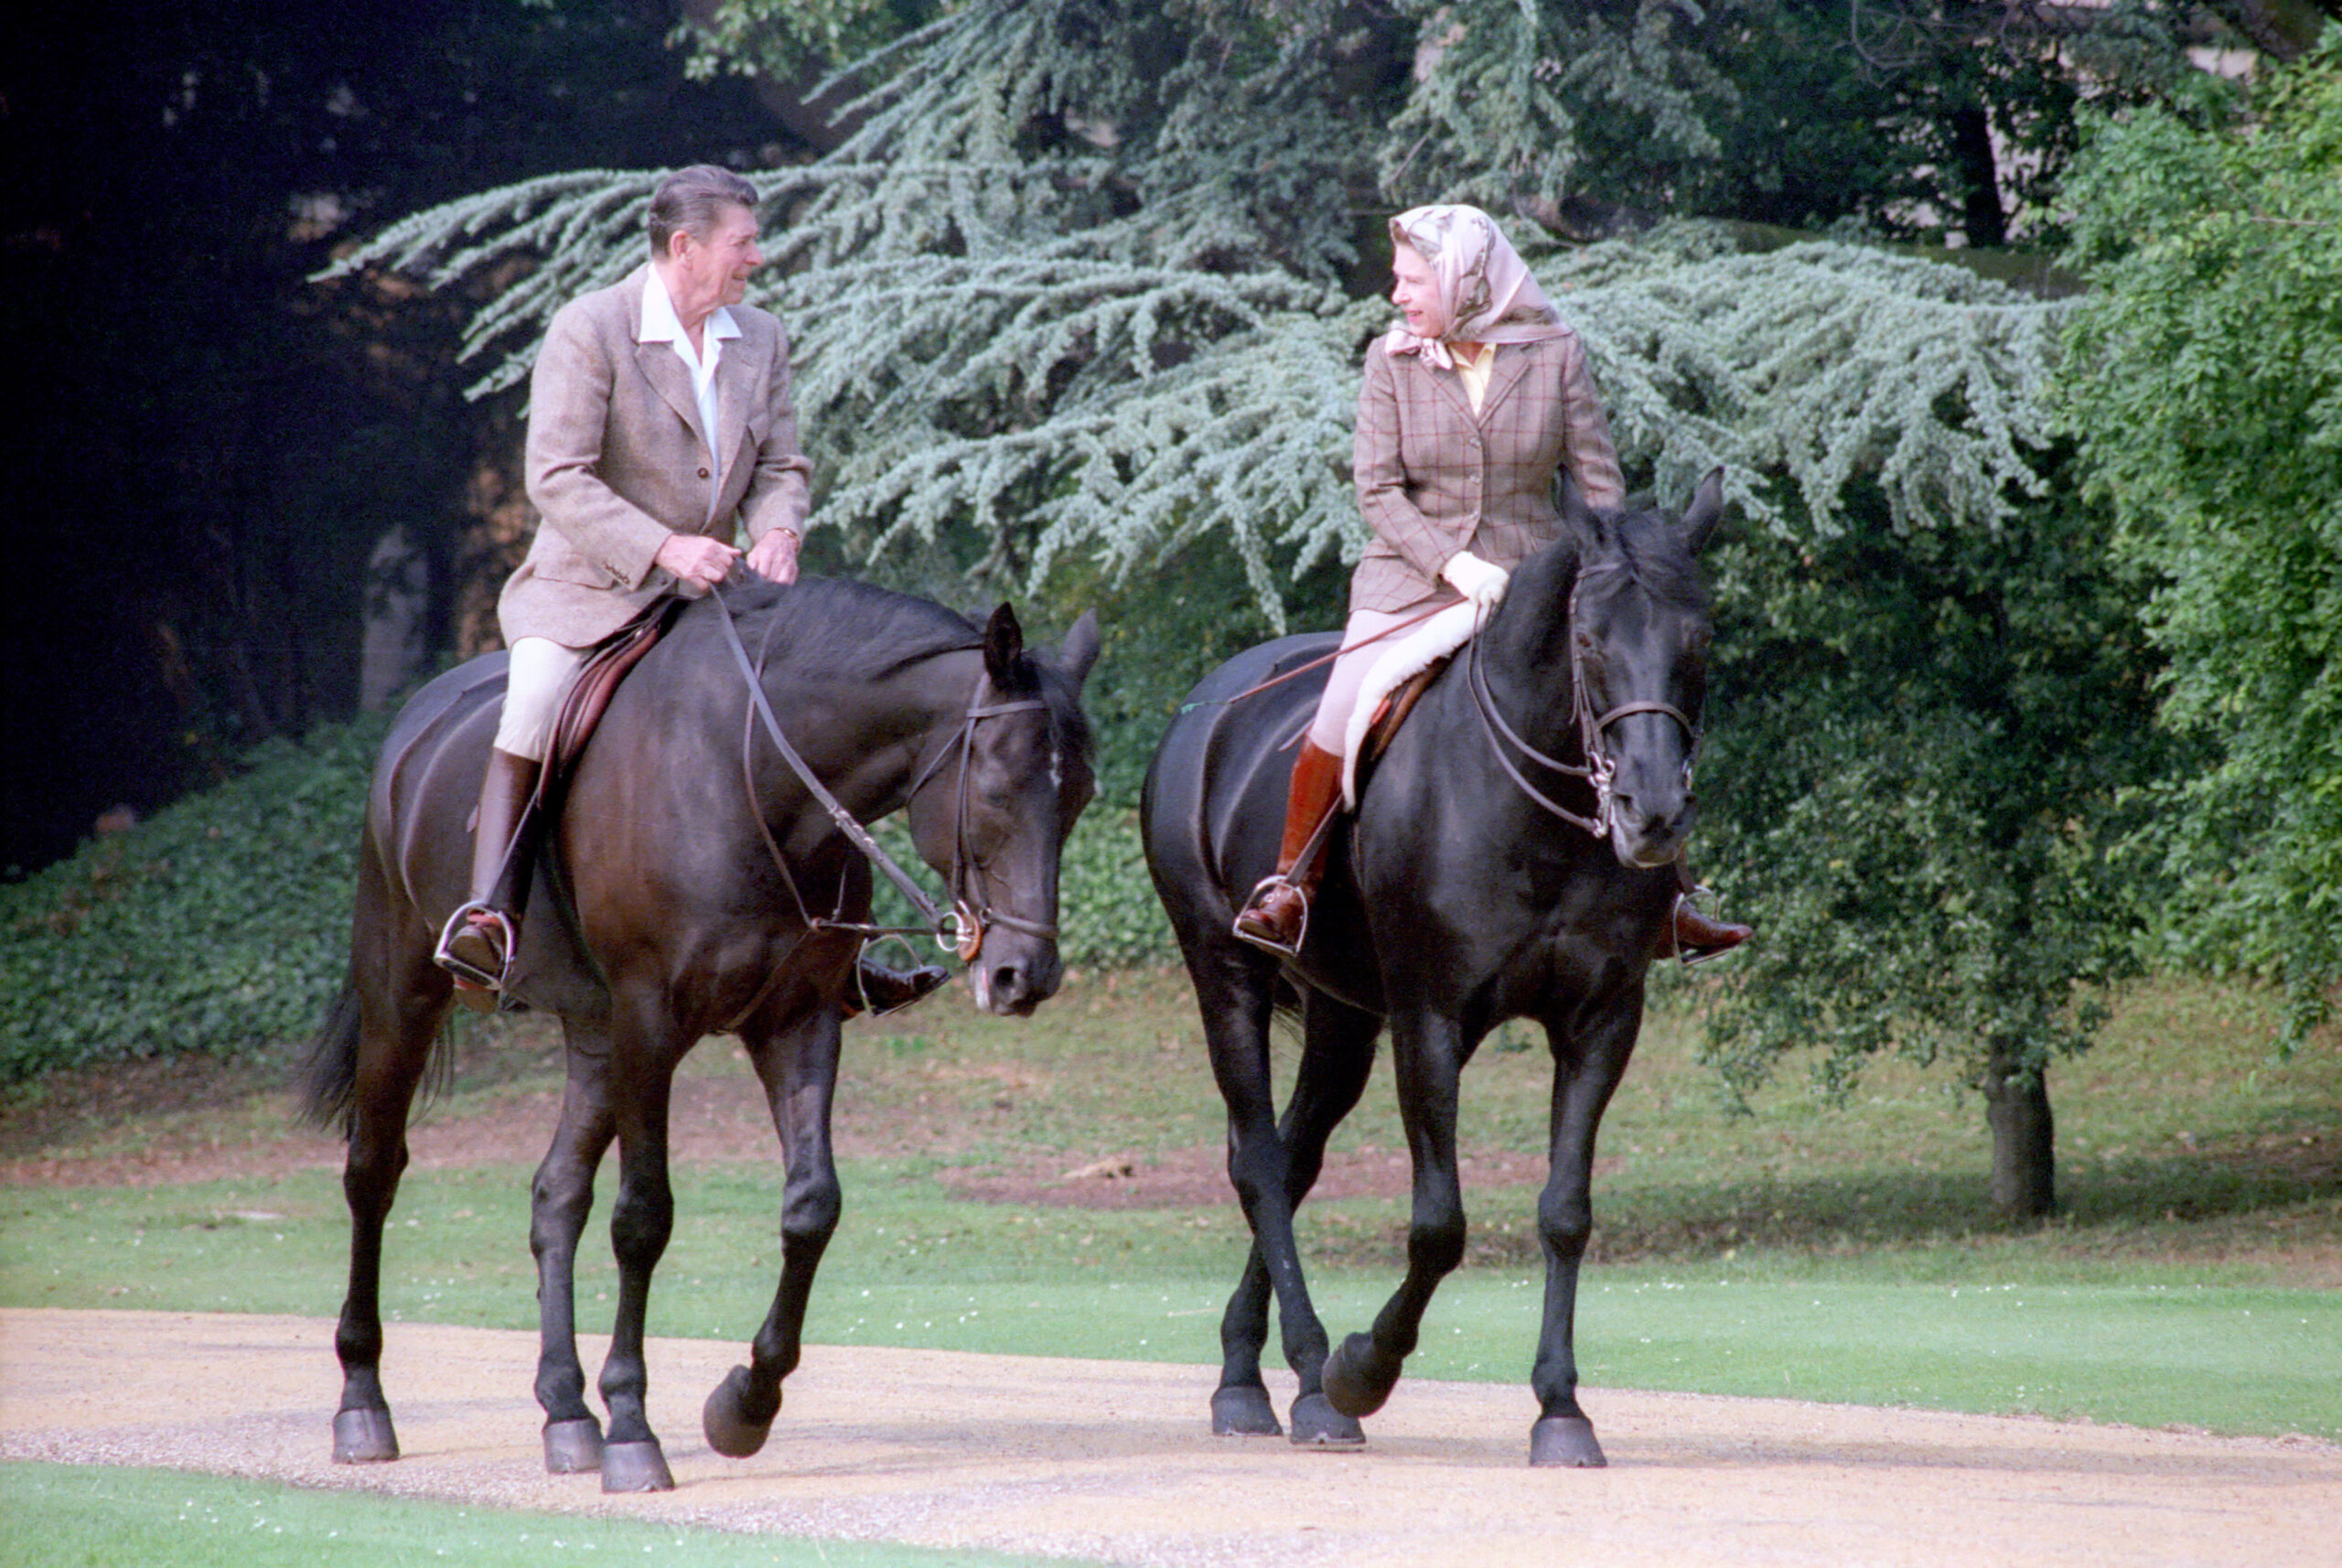 Reagan and Elizabeth II on horses at Windsor - NAI: 75856835